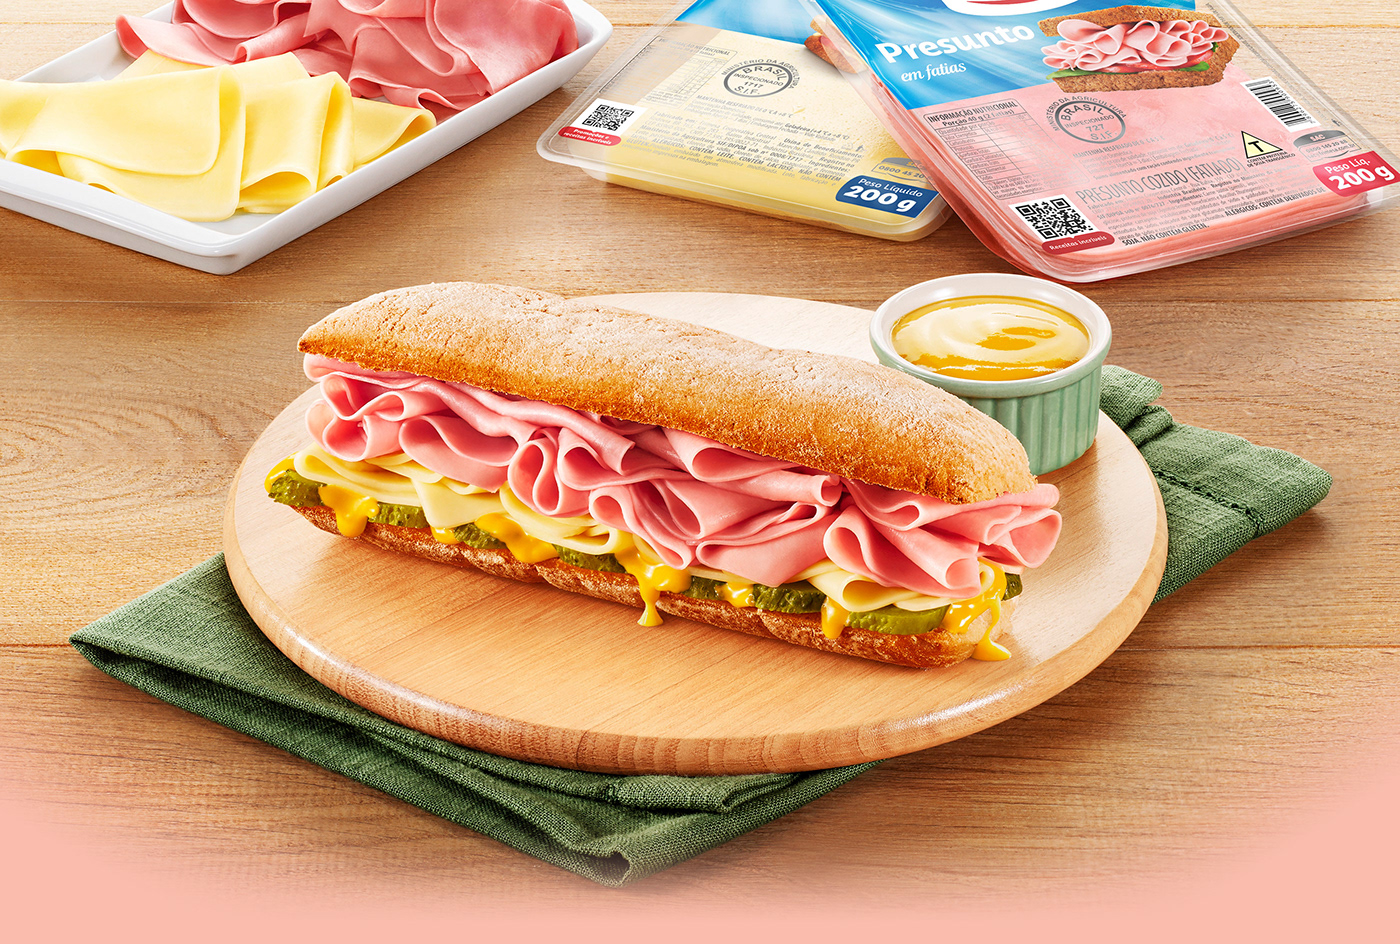 ad Advertising  Cheese ham package Packaging presunto queijo sanduíche sandwich